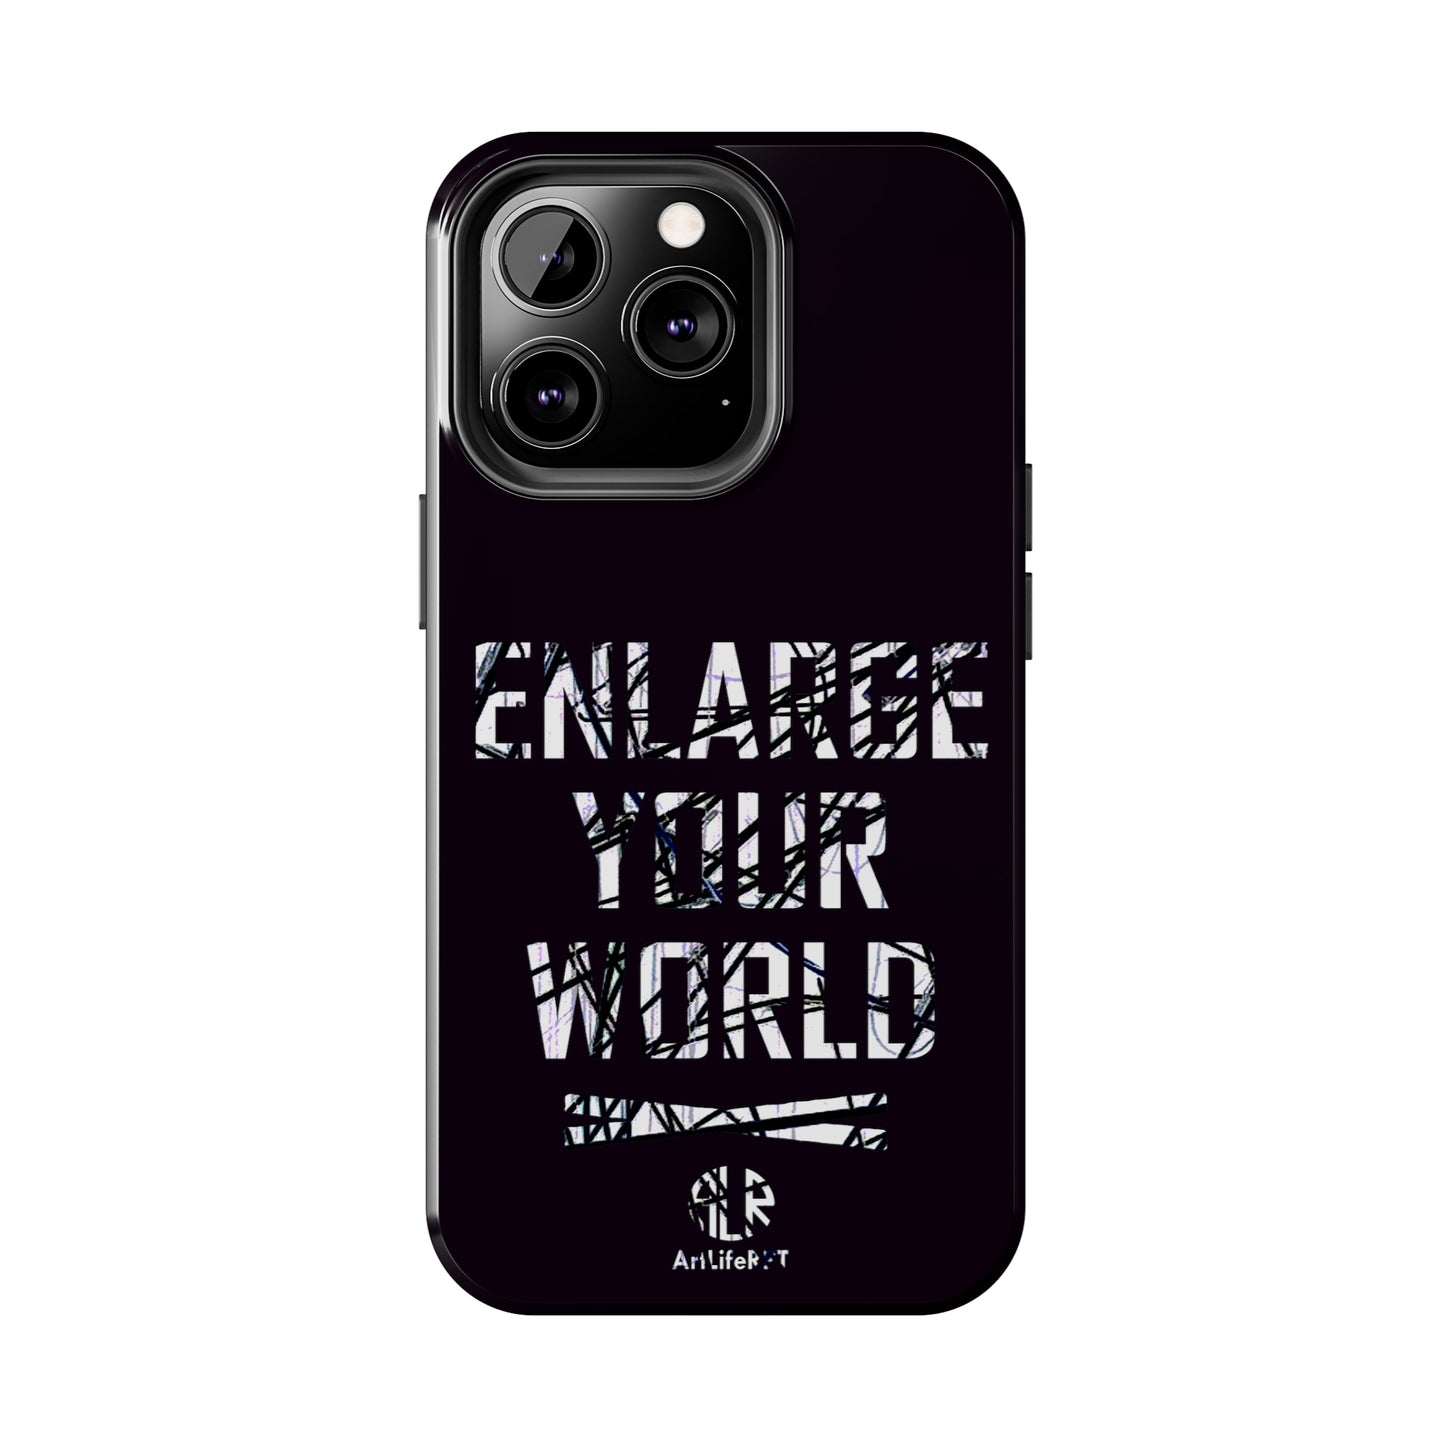 enlargeyourworld Tough Phone Cases